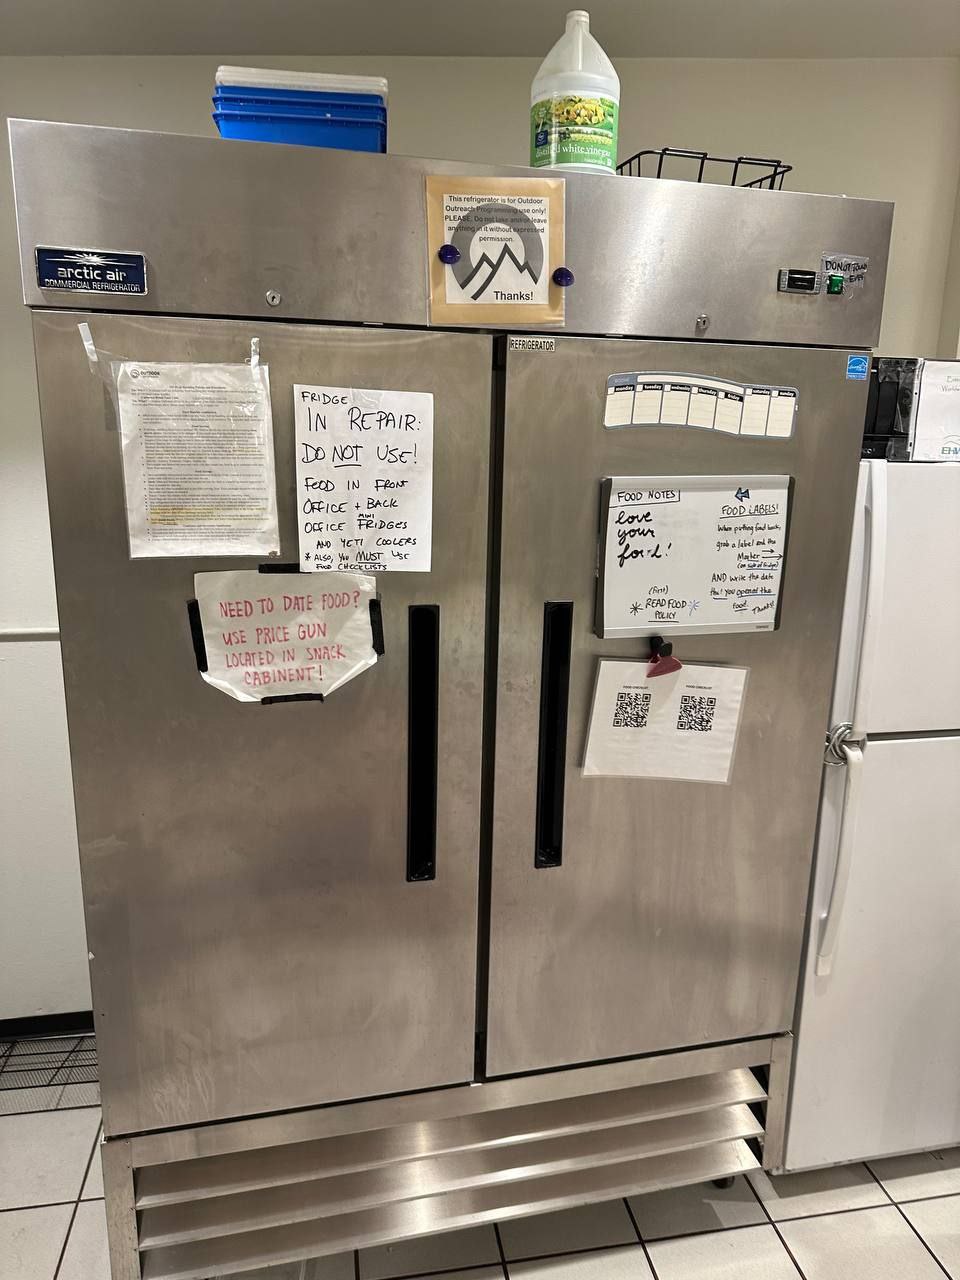 Commercial Refrigerator ArcticAir Repair